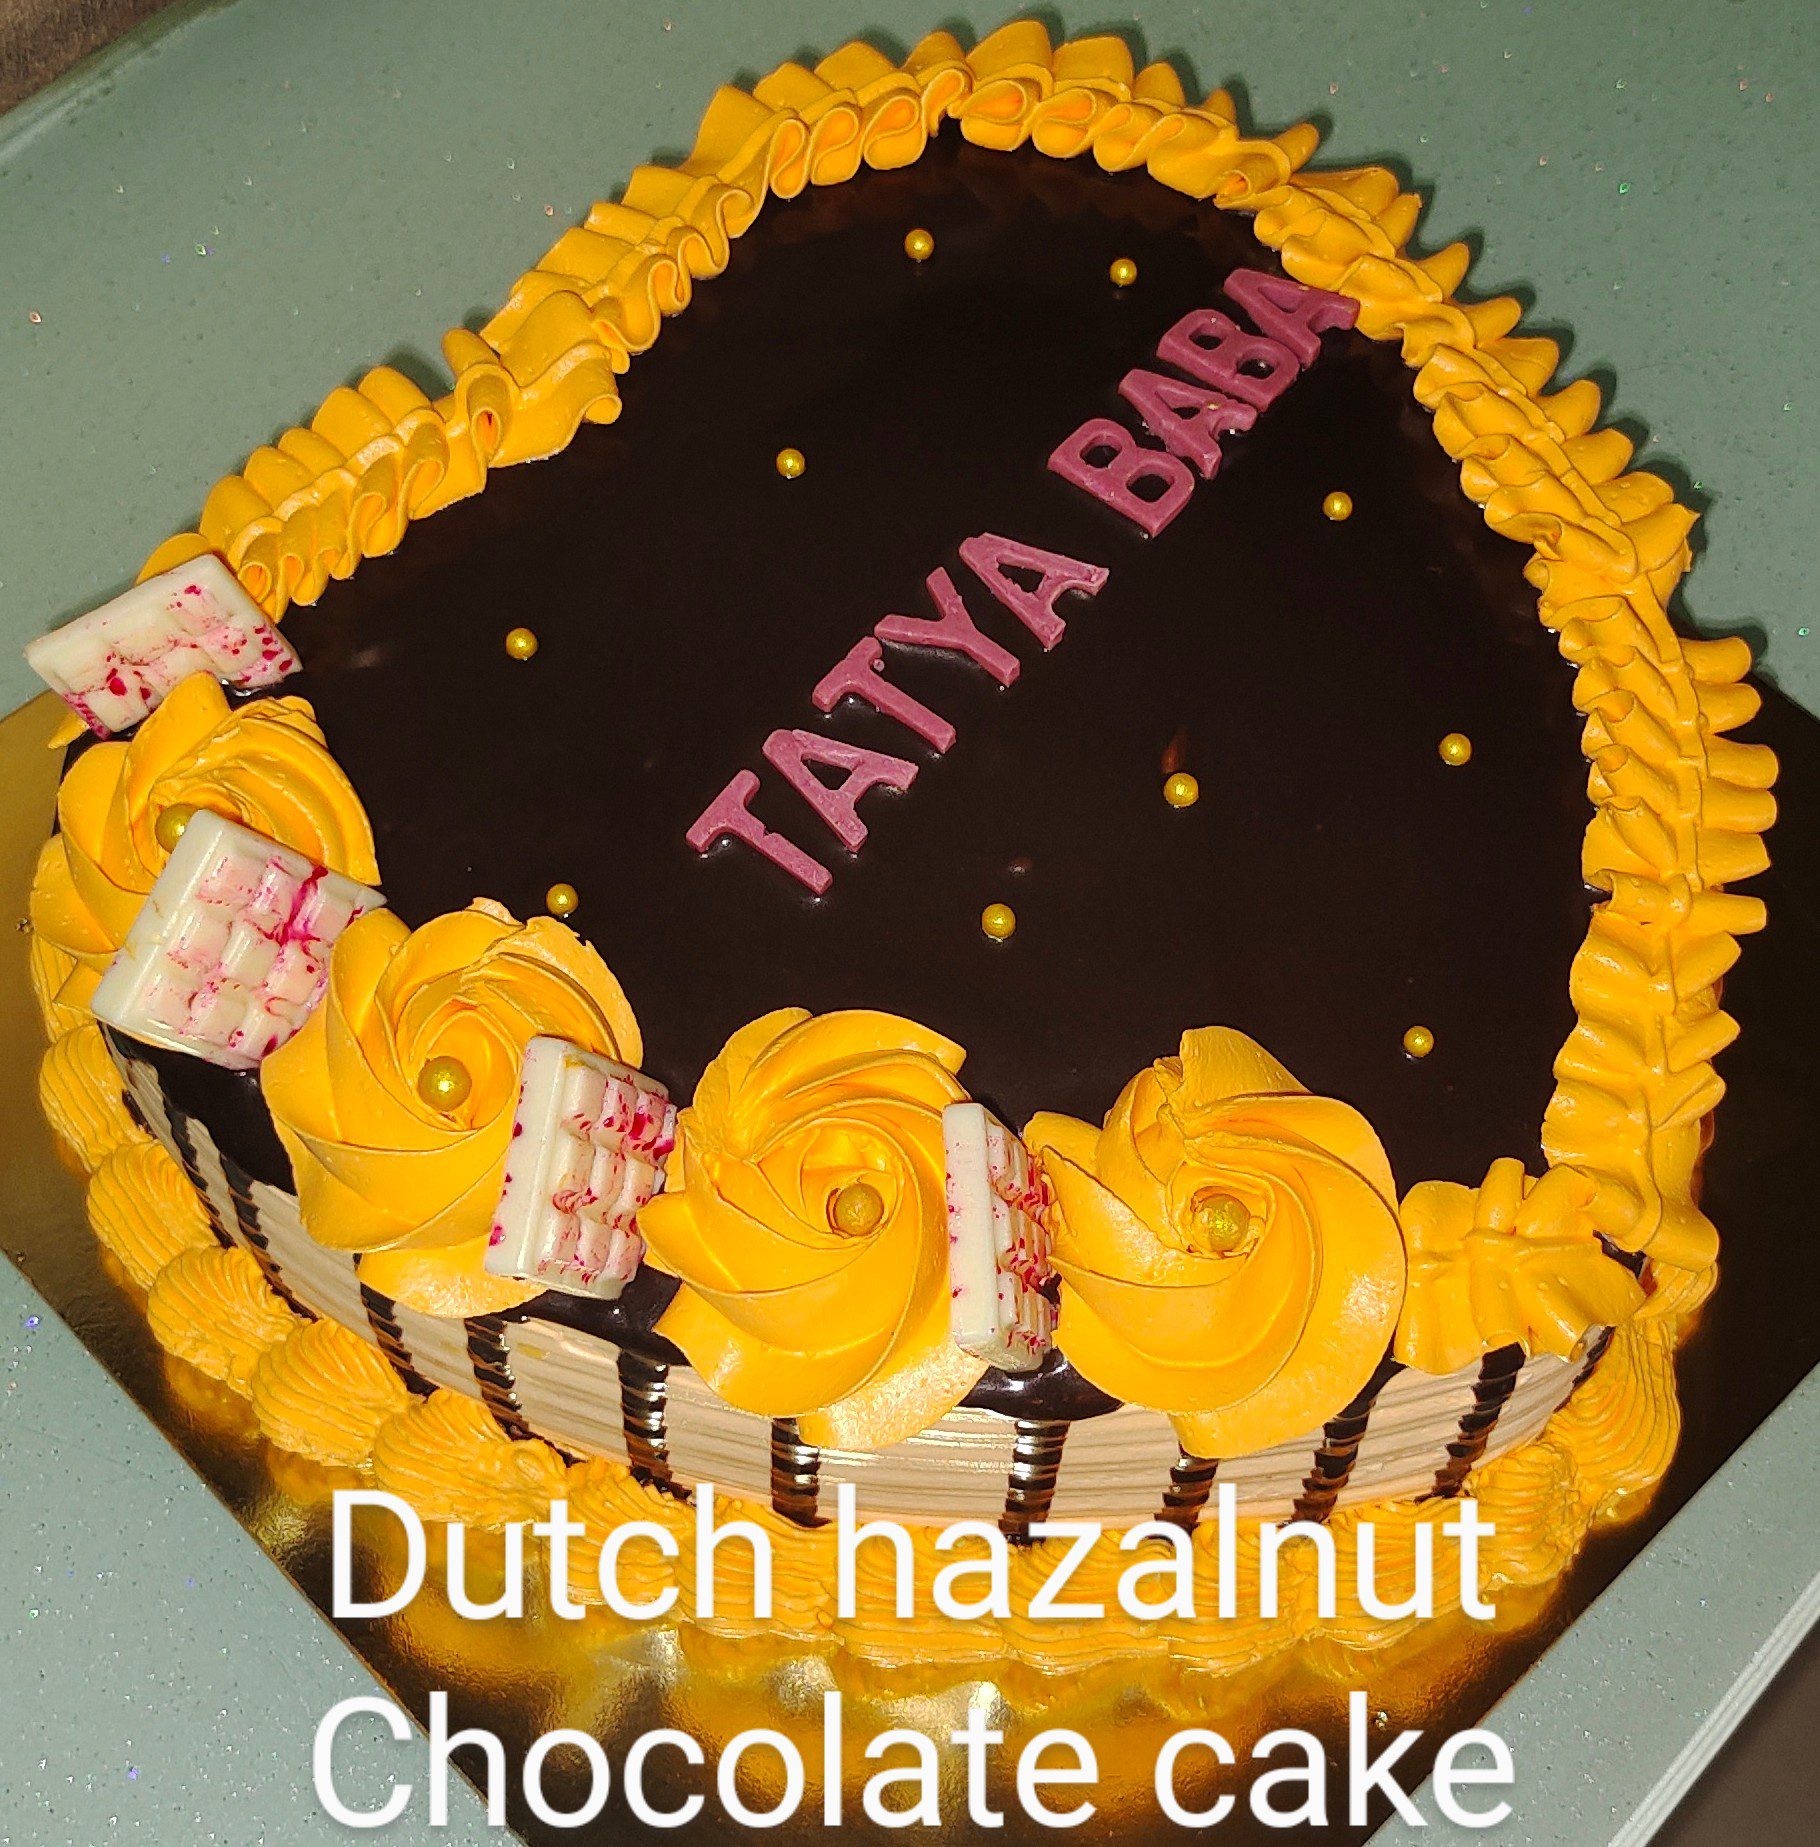 Dutch Hazalnut Chocolate Cake Designs, Images, Price Near Me